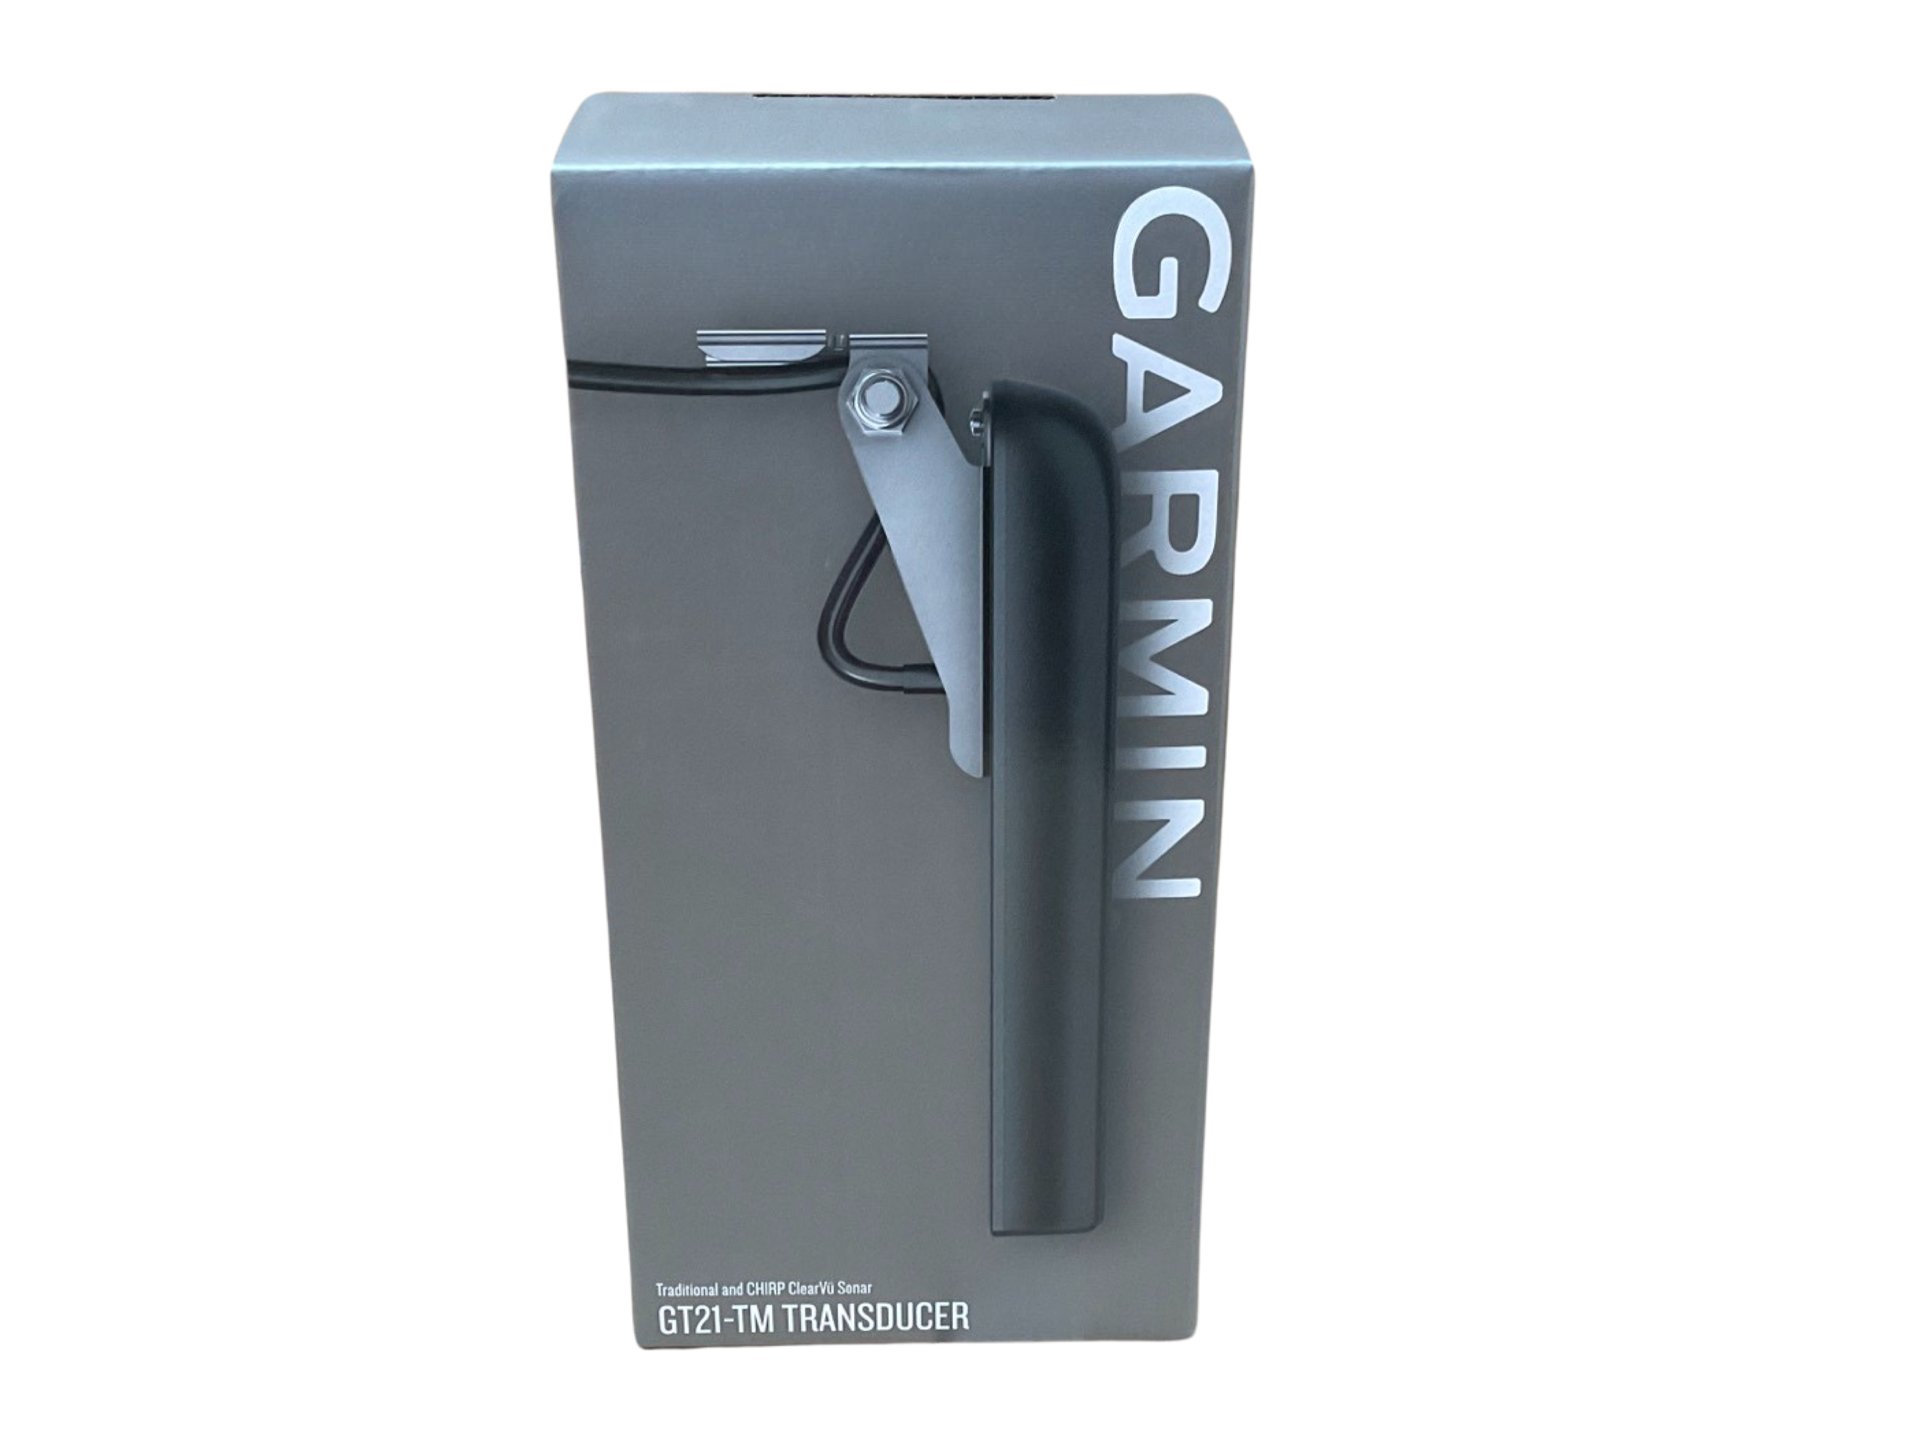 Garmin Transducer P/N: GT21-TM